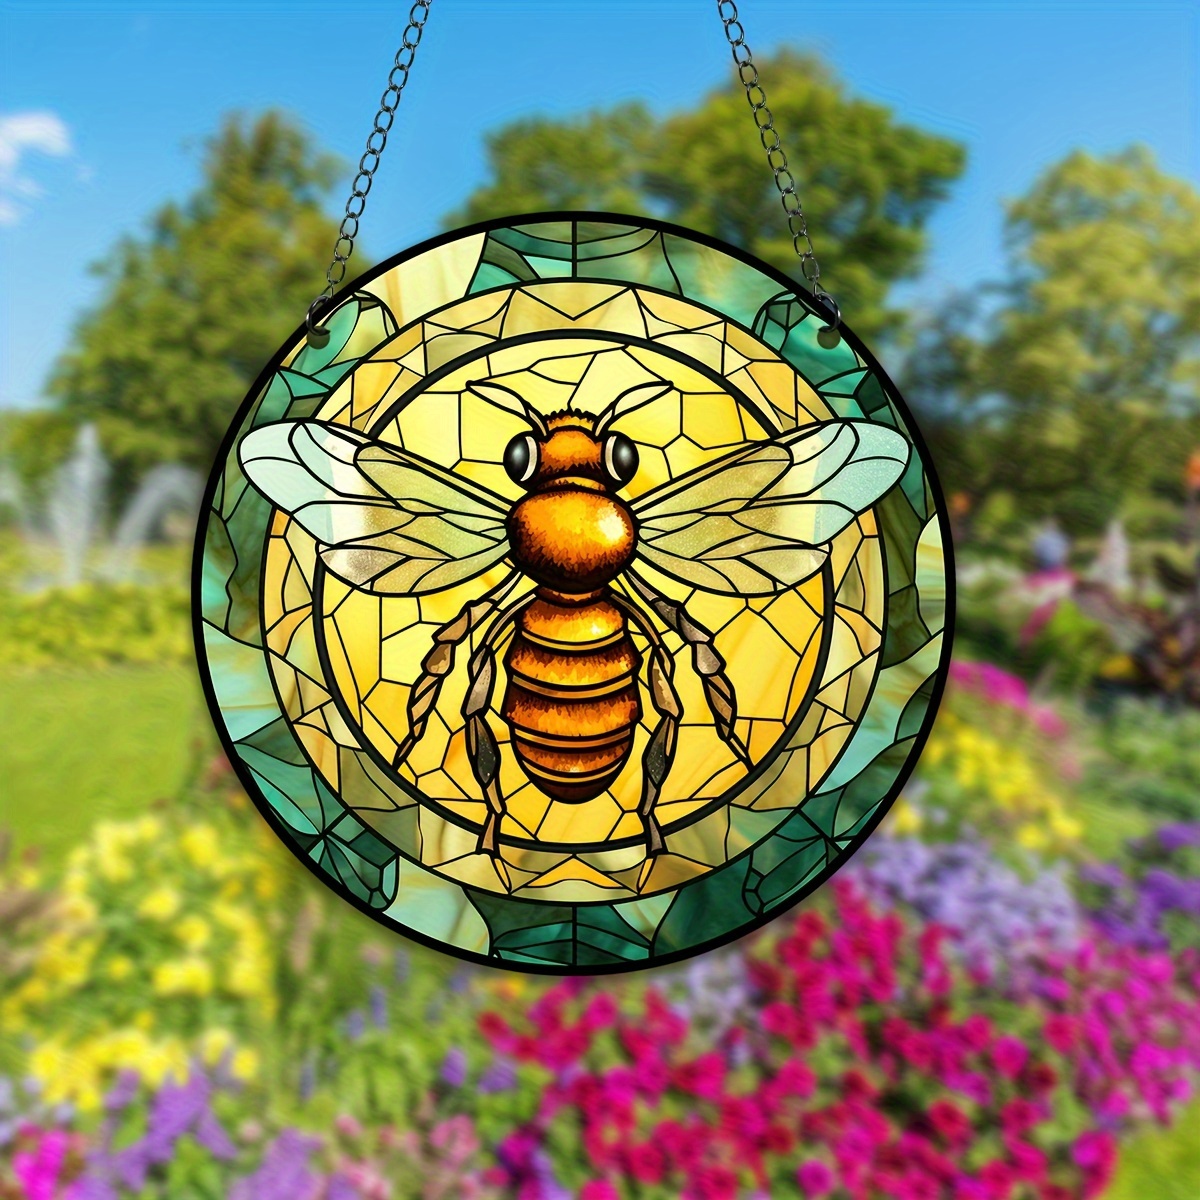 Stained Bee Honeycomb Hanging Suncatcher Ornaments Window Garden Decor